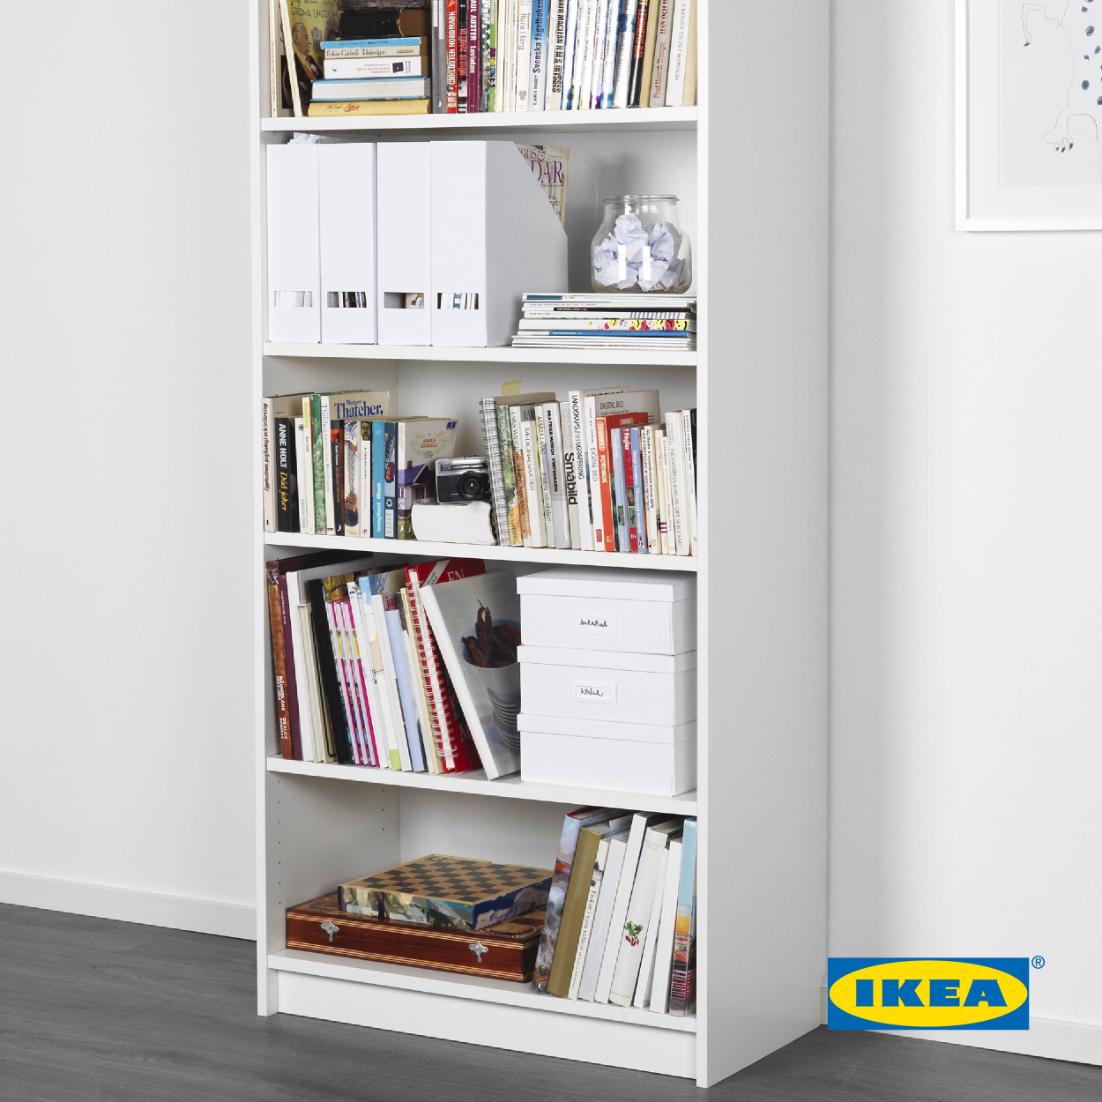  IKEA  Indonesia  on Twitter Tata bukumu lebih rapi dan 